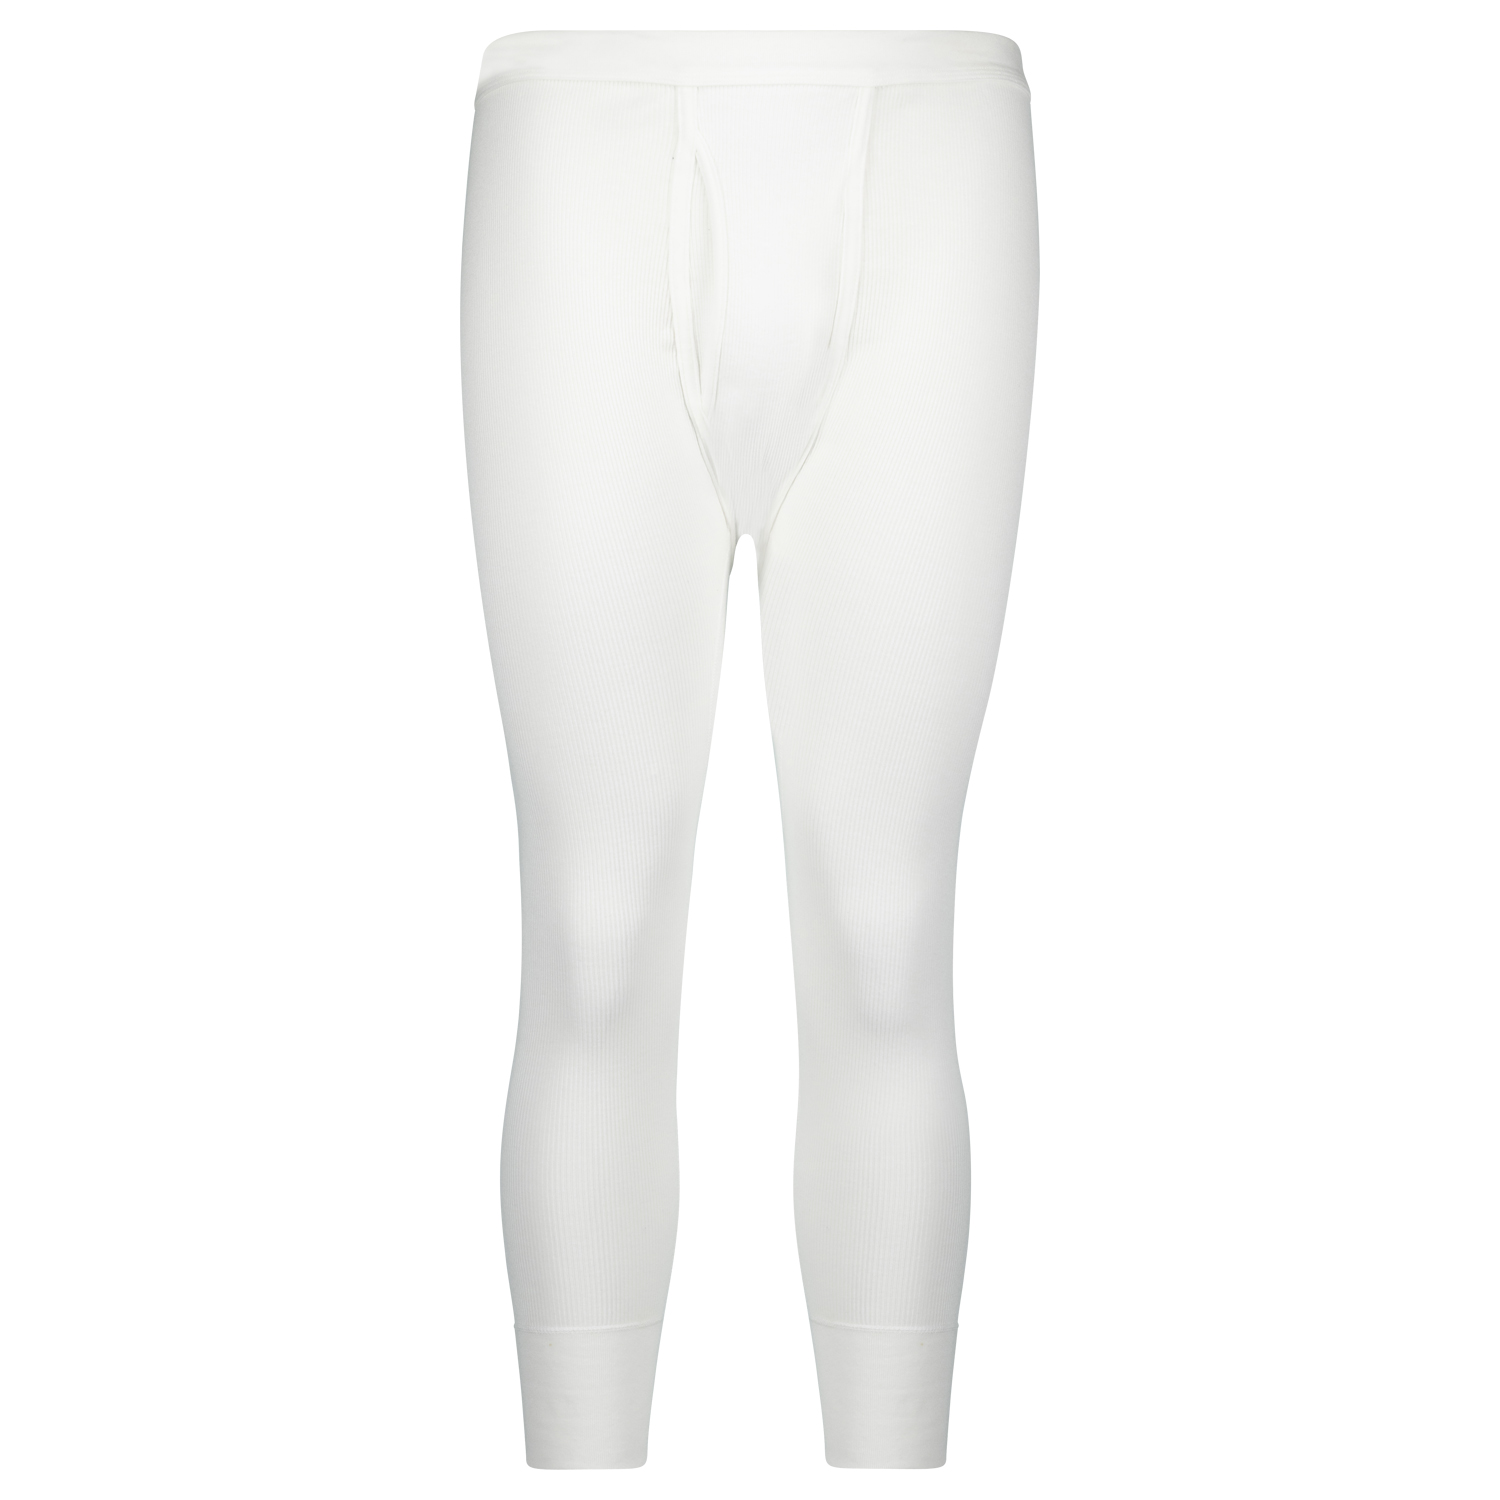 White double rib PRESTIGE ¾ trousers by ADAMO up to kingsize 20